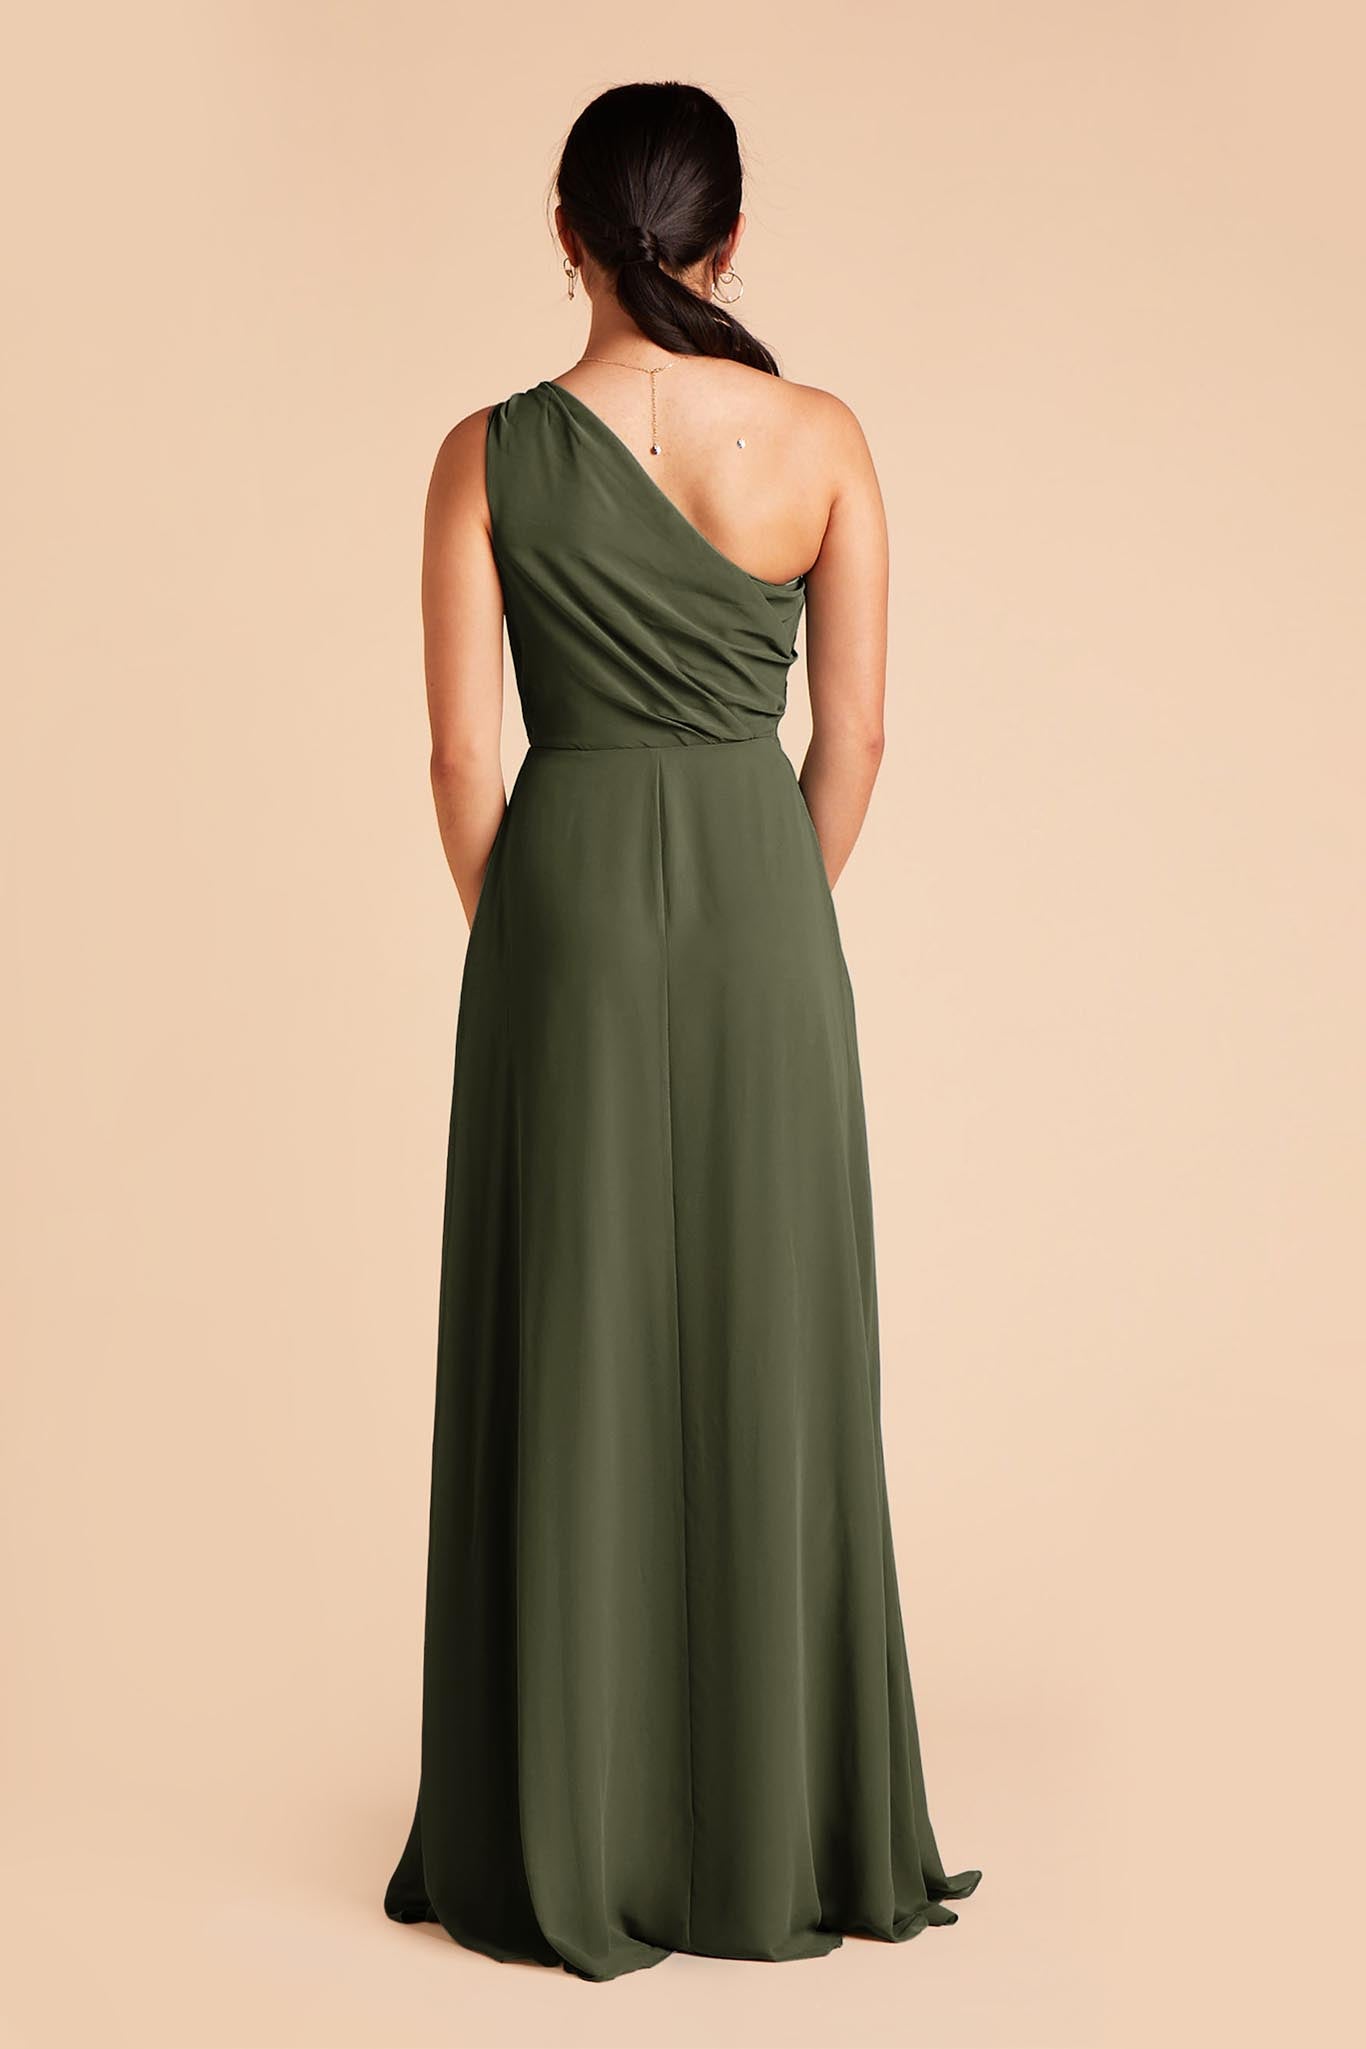 Olive Kira Dress by Birdy Grey